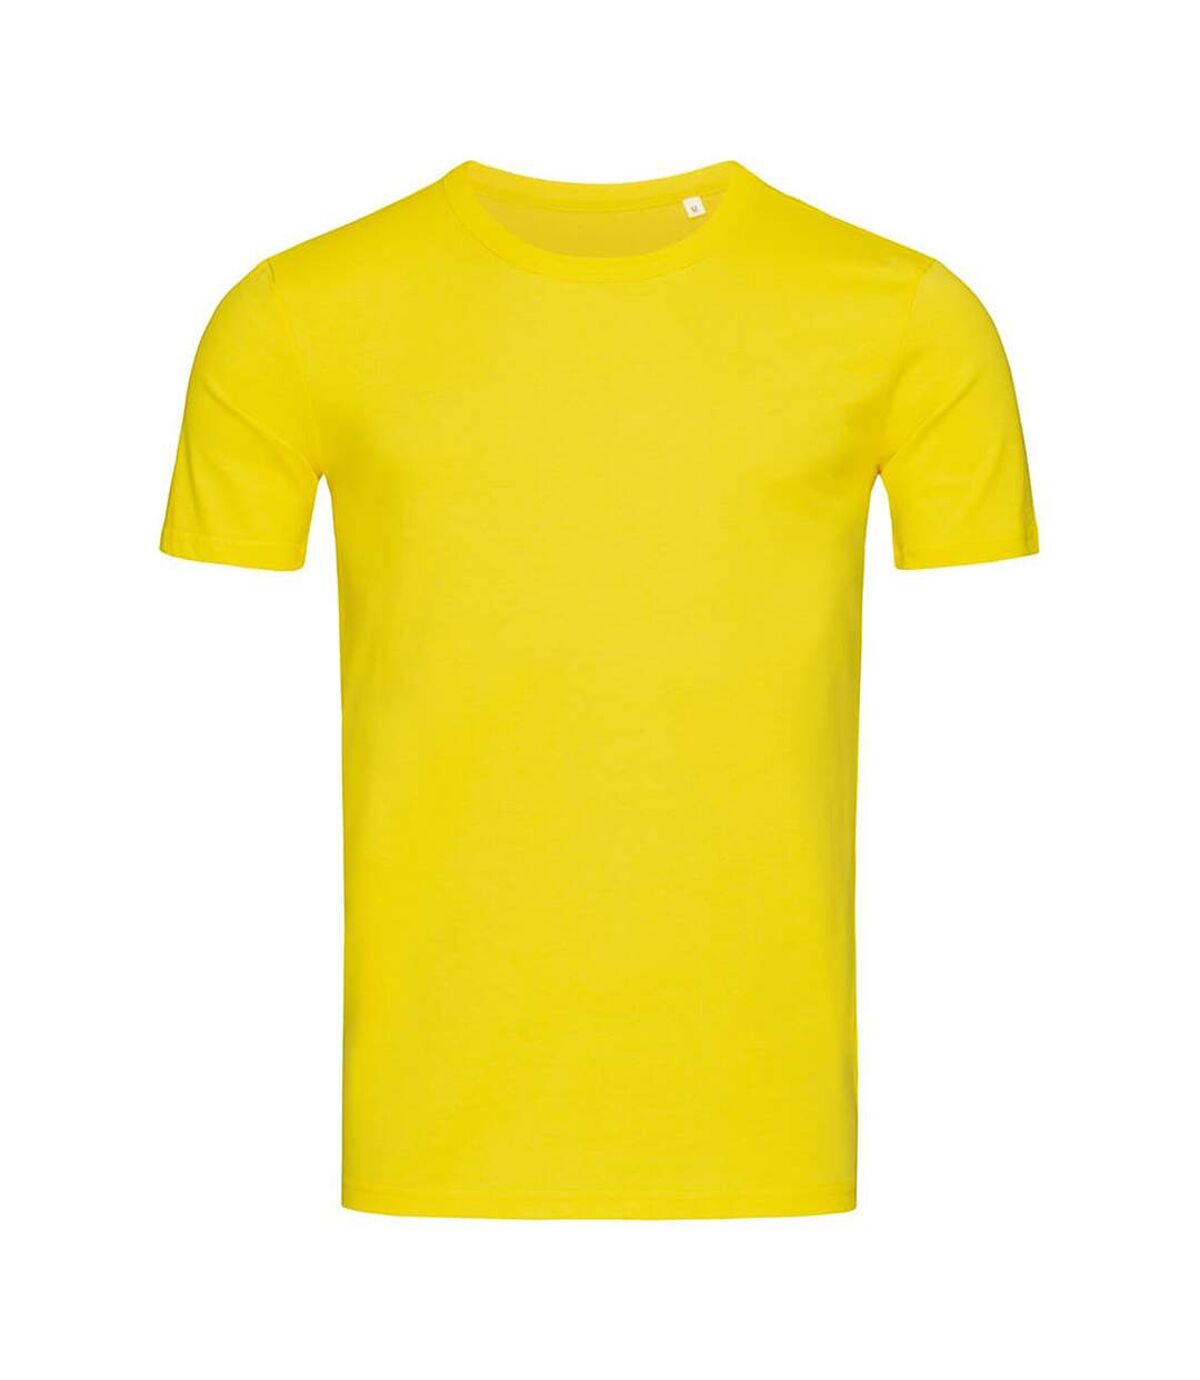 Stedman - T-shirt STARS MORGAN - Homme (Jaune) - UTAB357